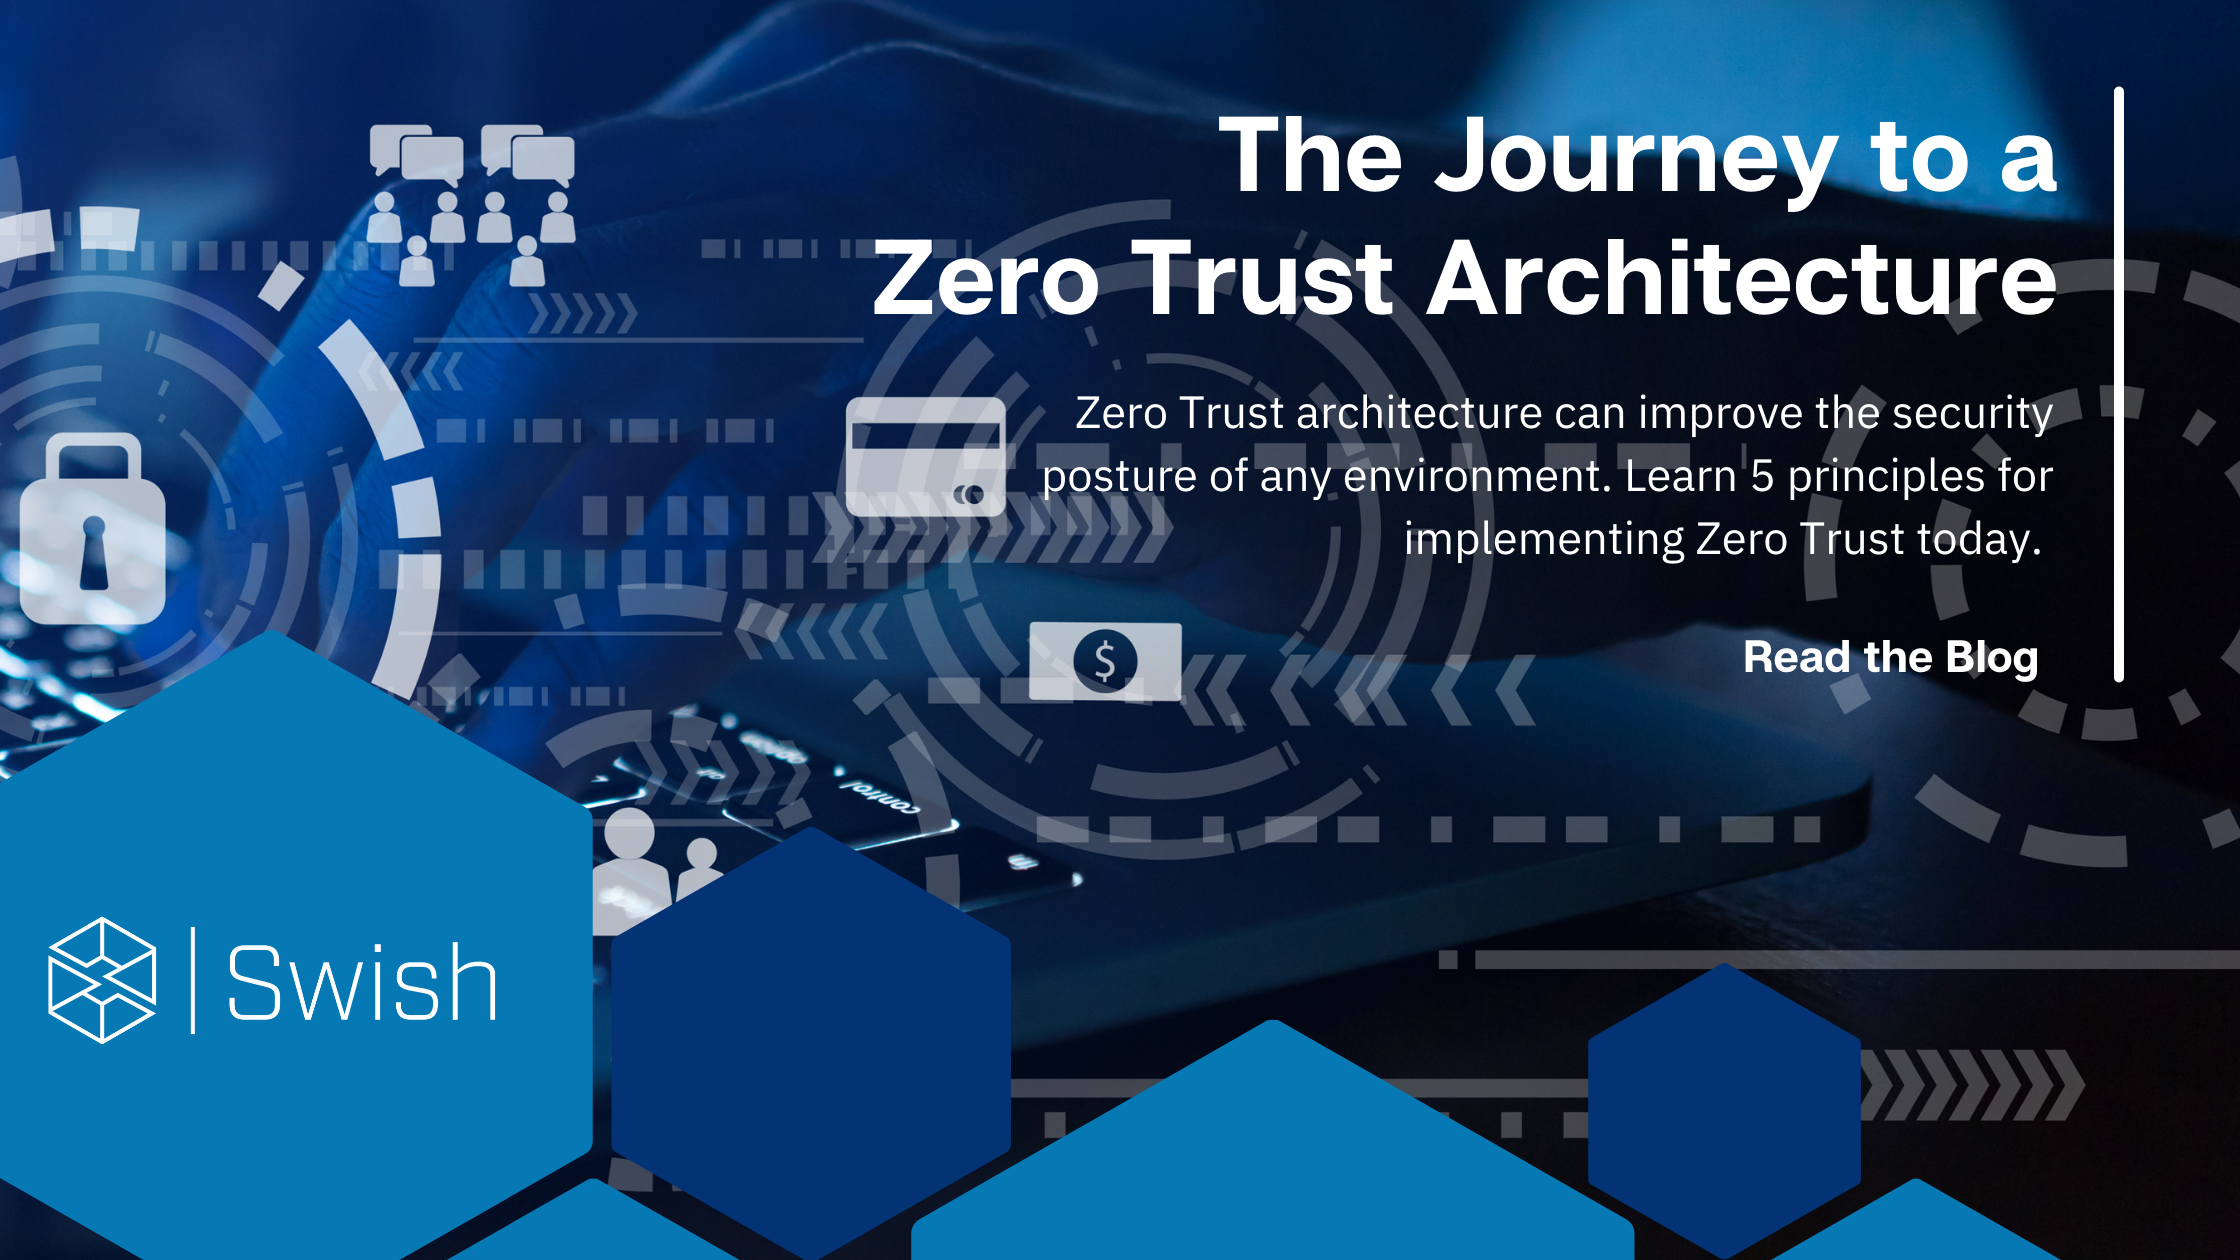 The Journey to a Zero Trust Architecture